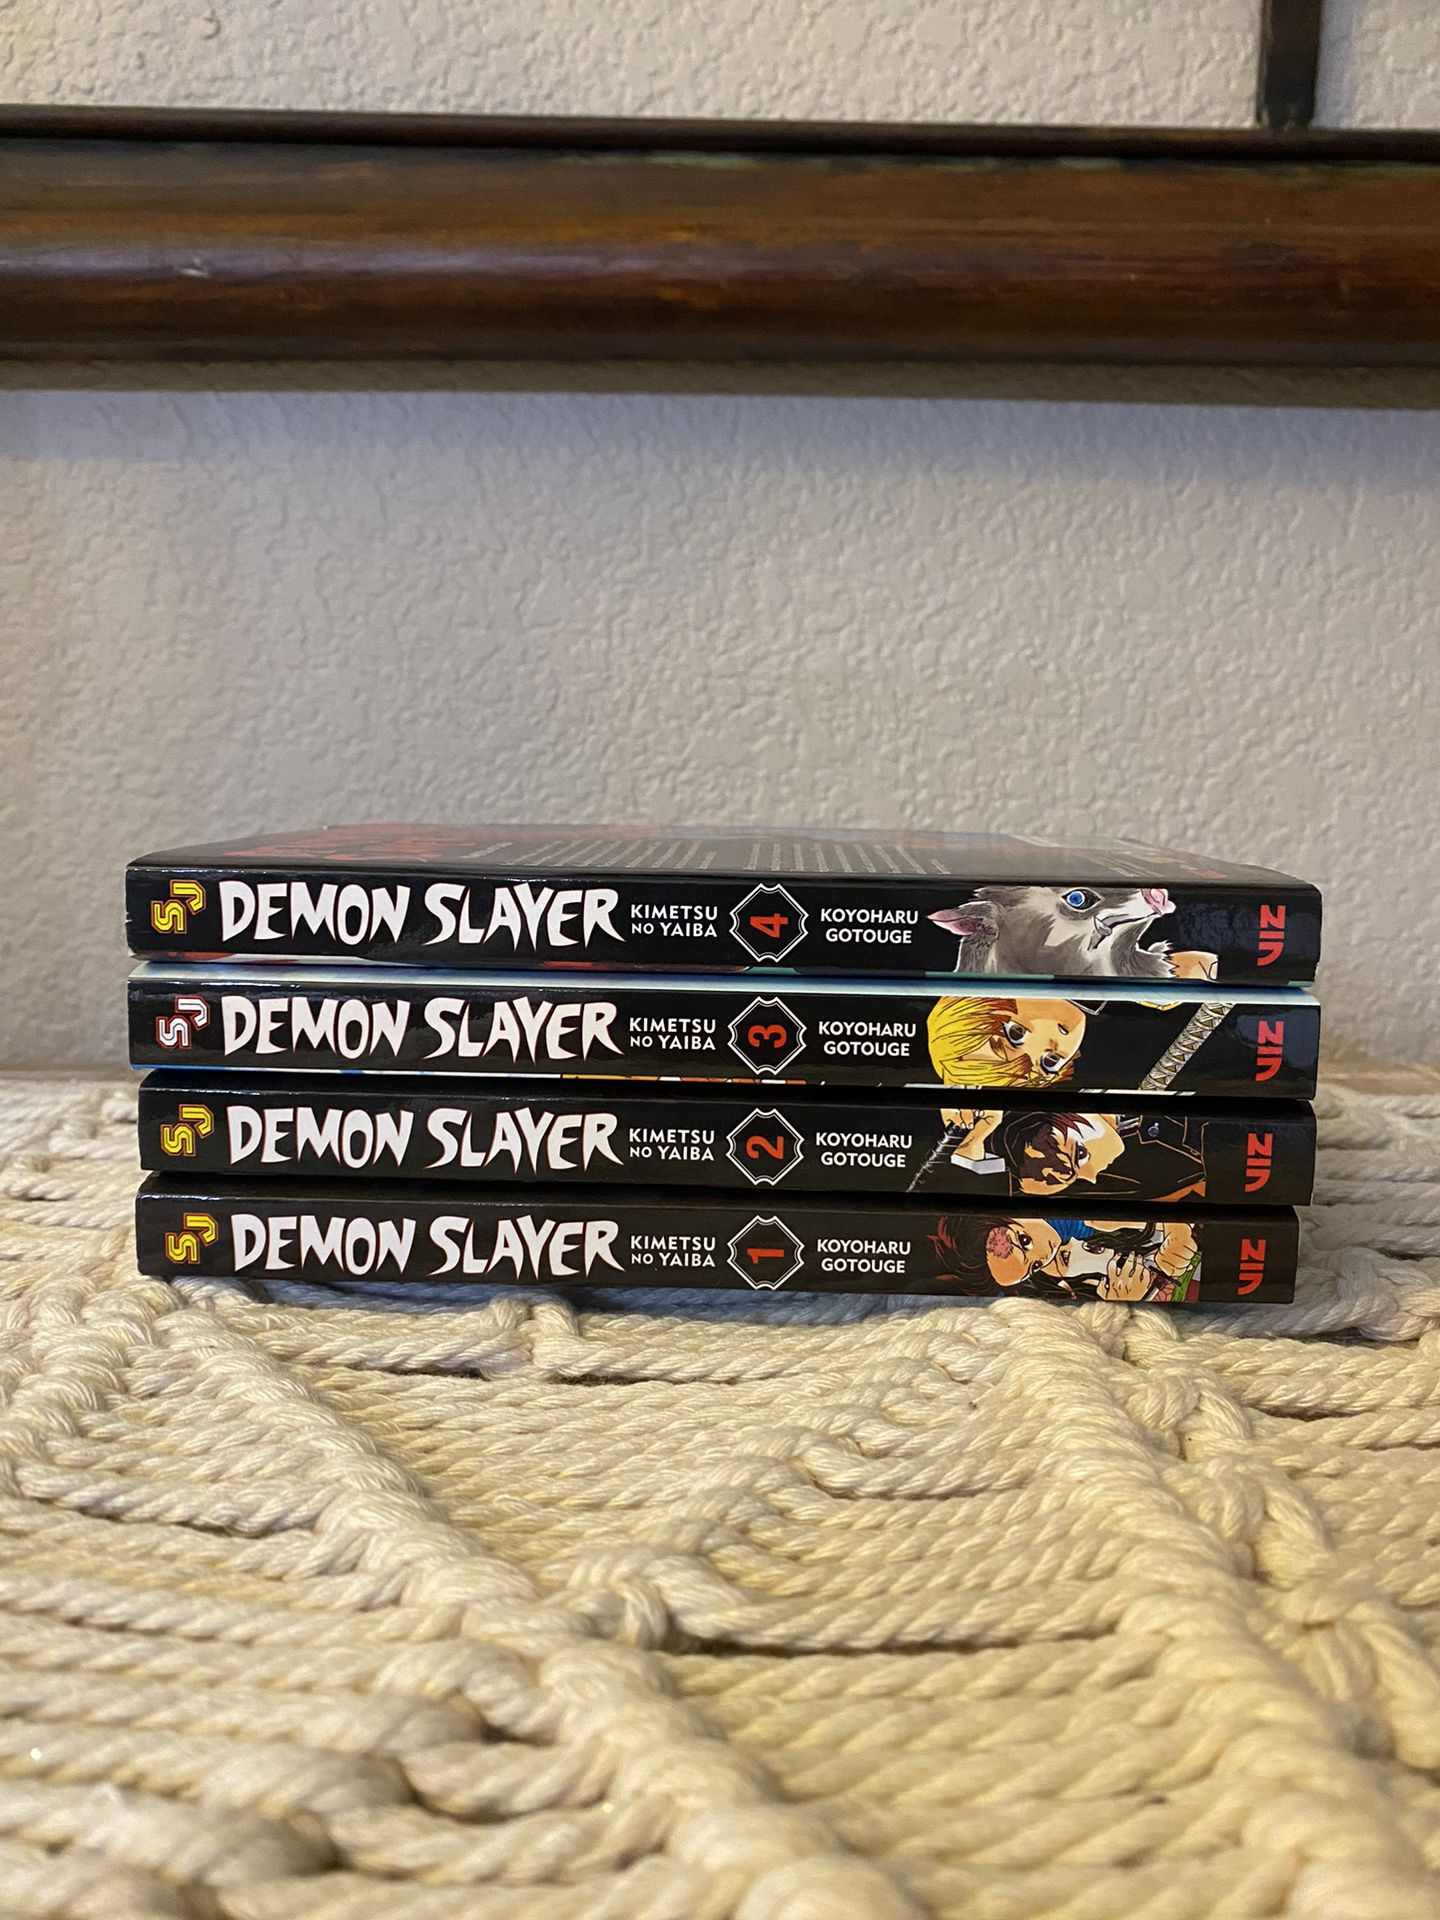 Demon Slayer Volumes 1-4